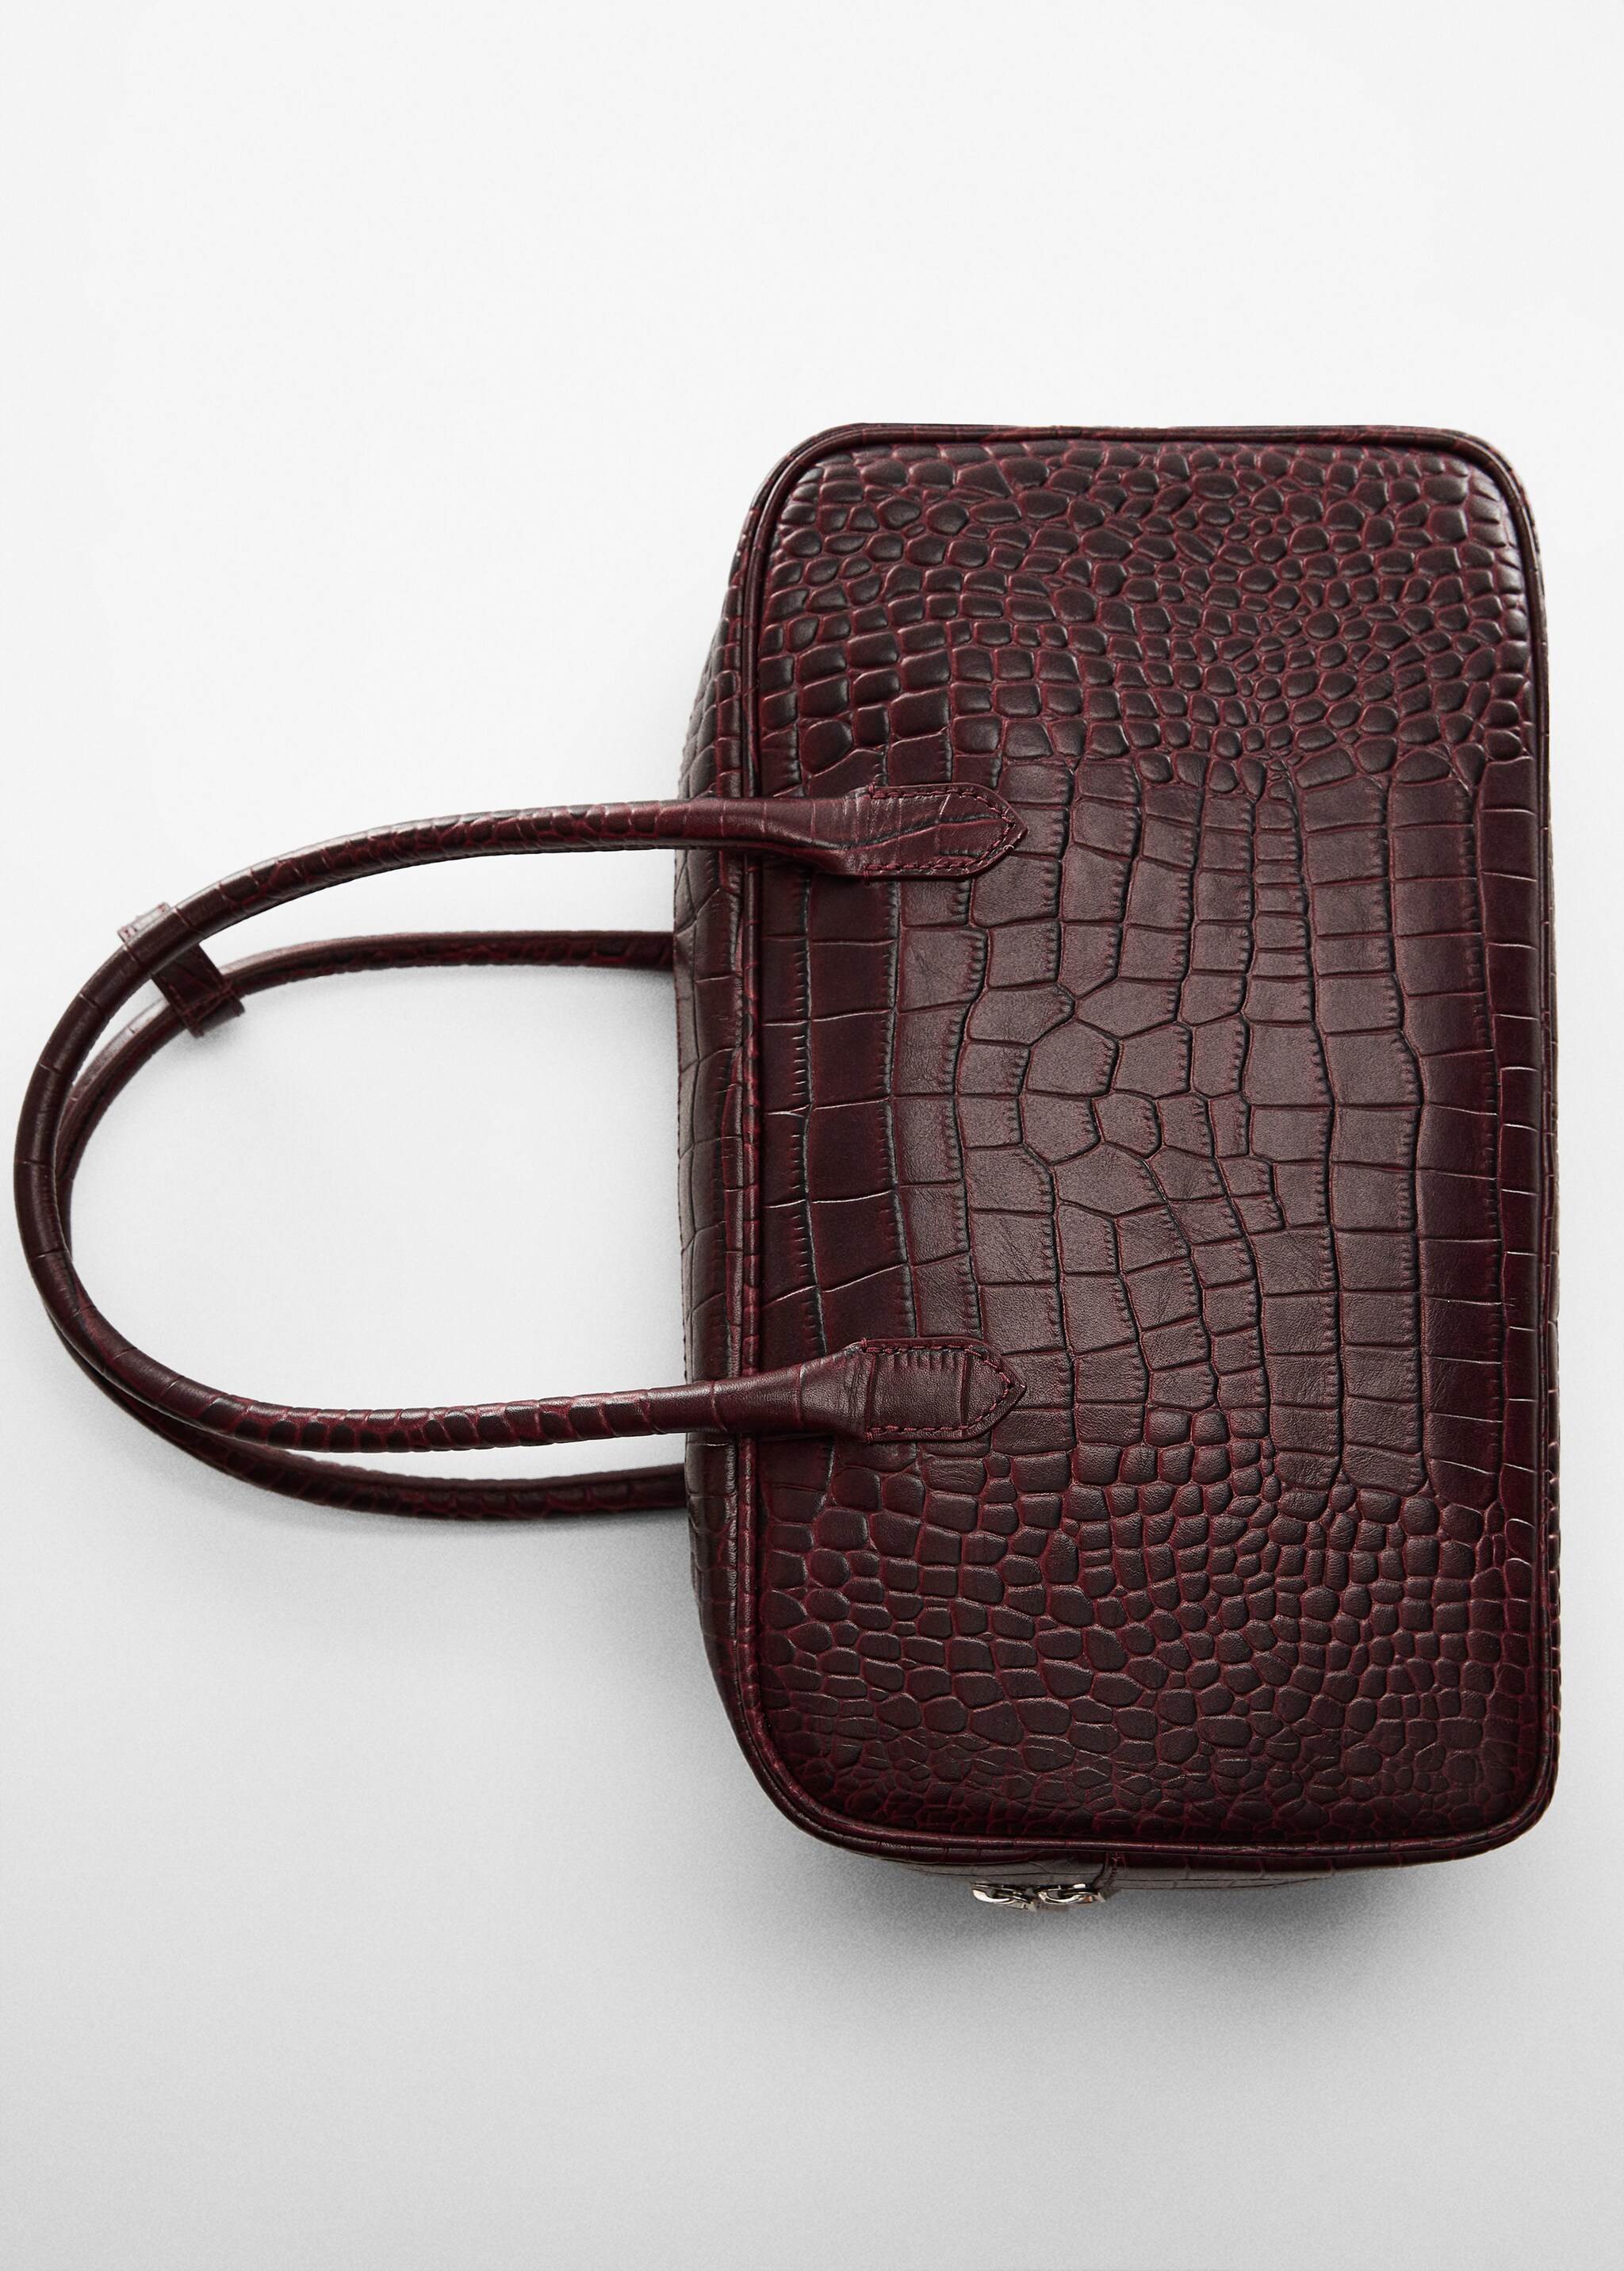 Rectangular leather handbag - Details of the article 5